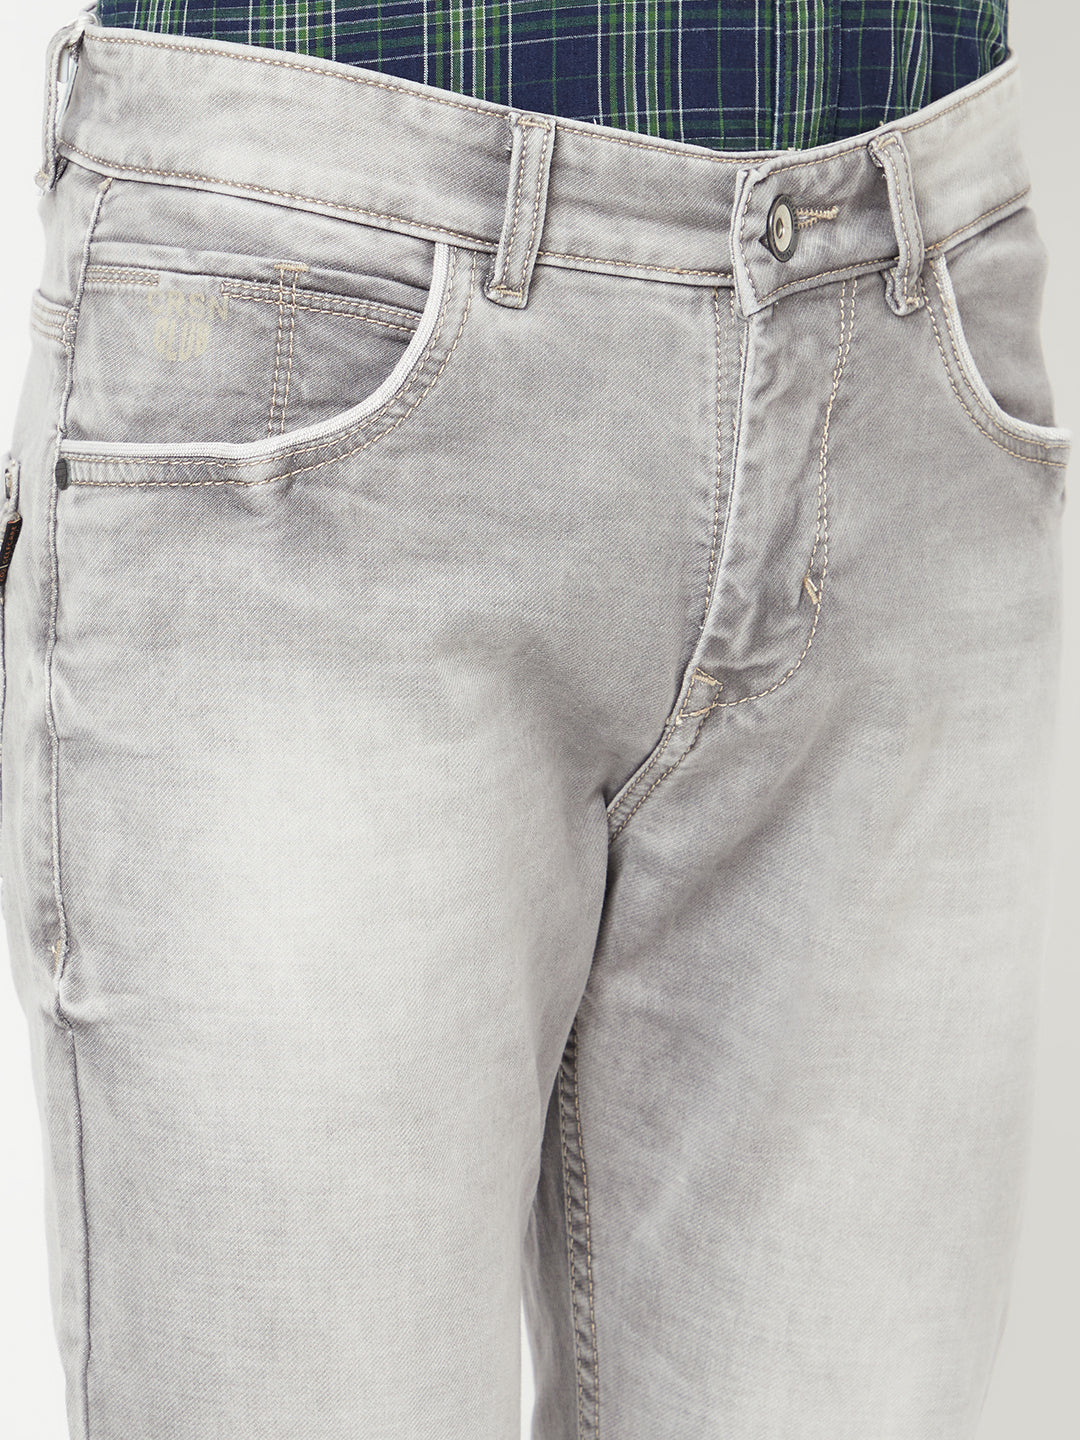 Grey Light Fade Jeans - Men Jeans